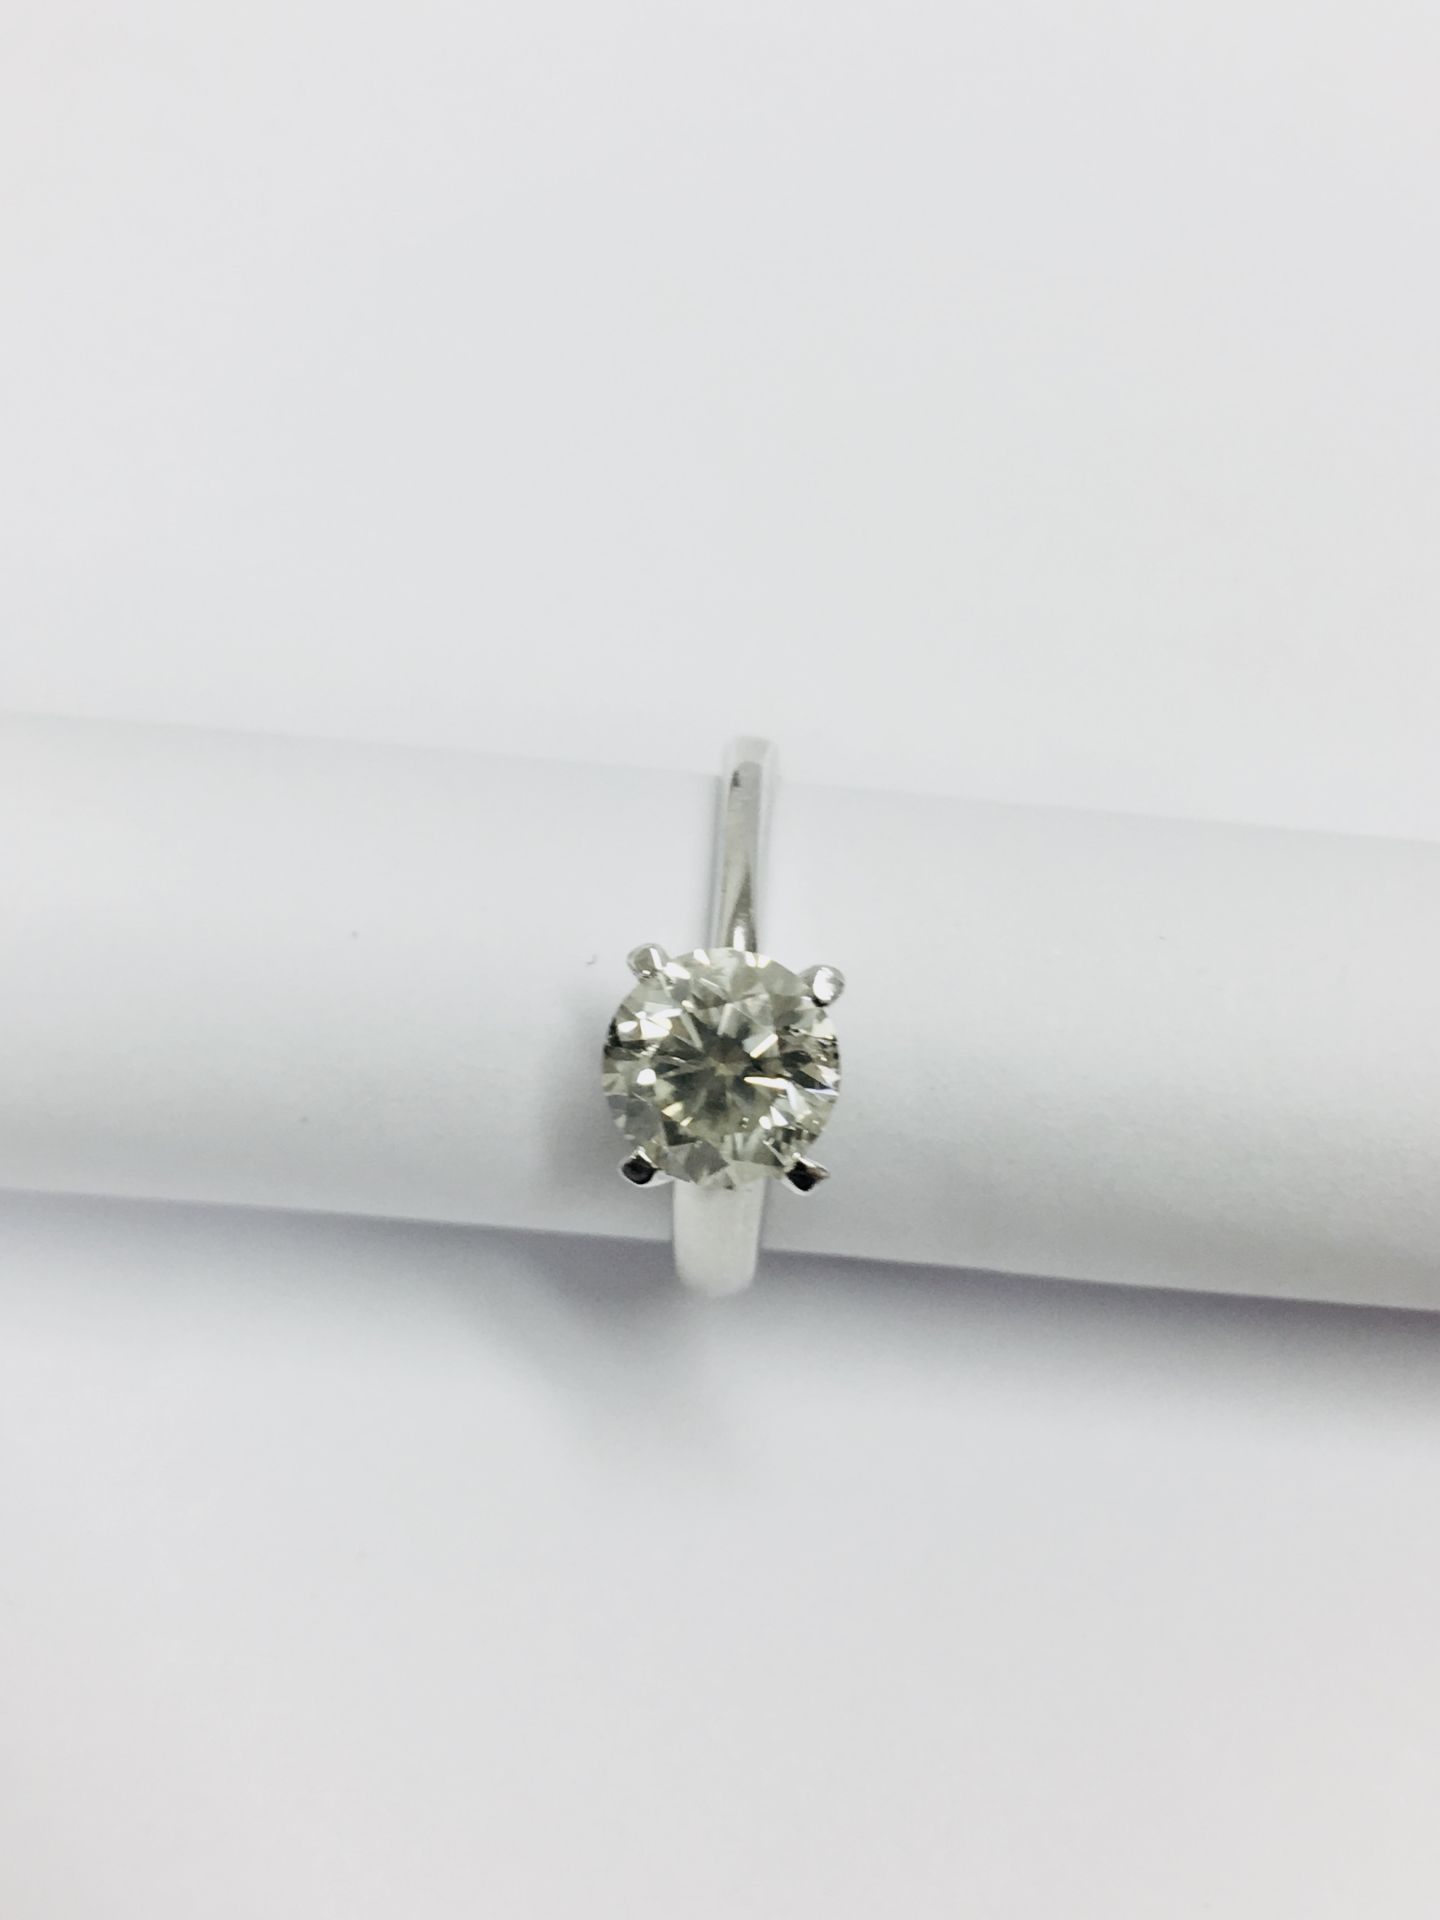 1.02 ct diamond twist solitaire ring set in platinum. 6 claw setting. Enhanced brilliant cut